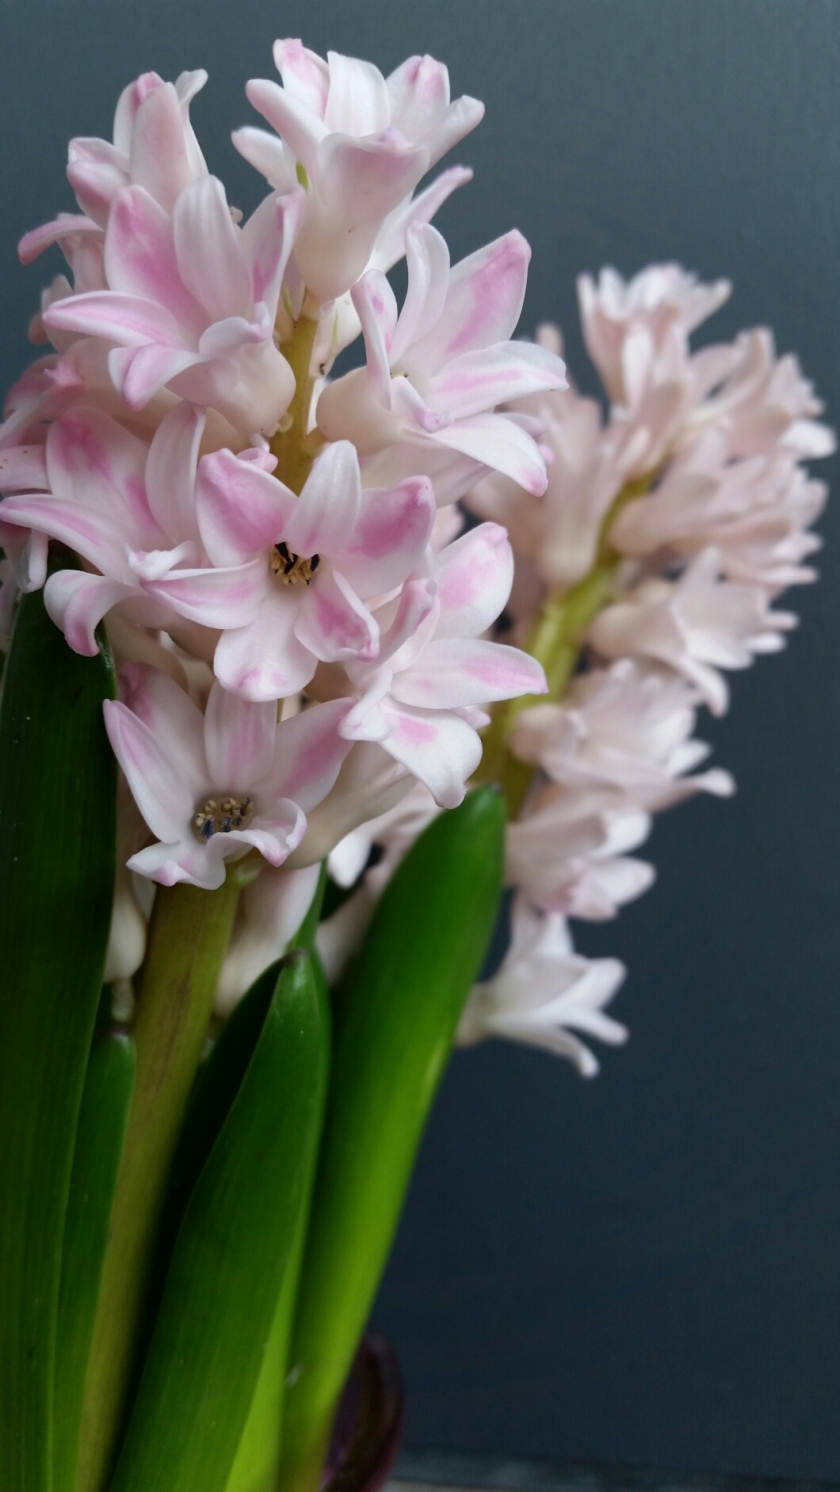 Pale pink hyacinths in a vase